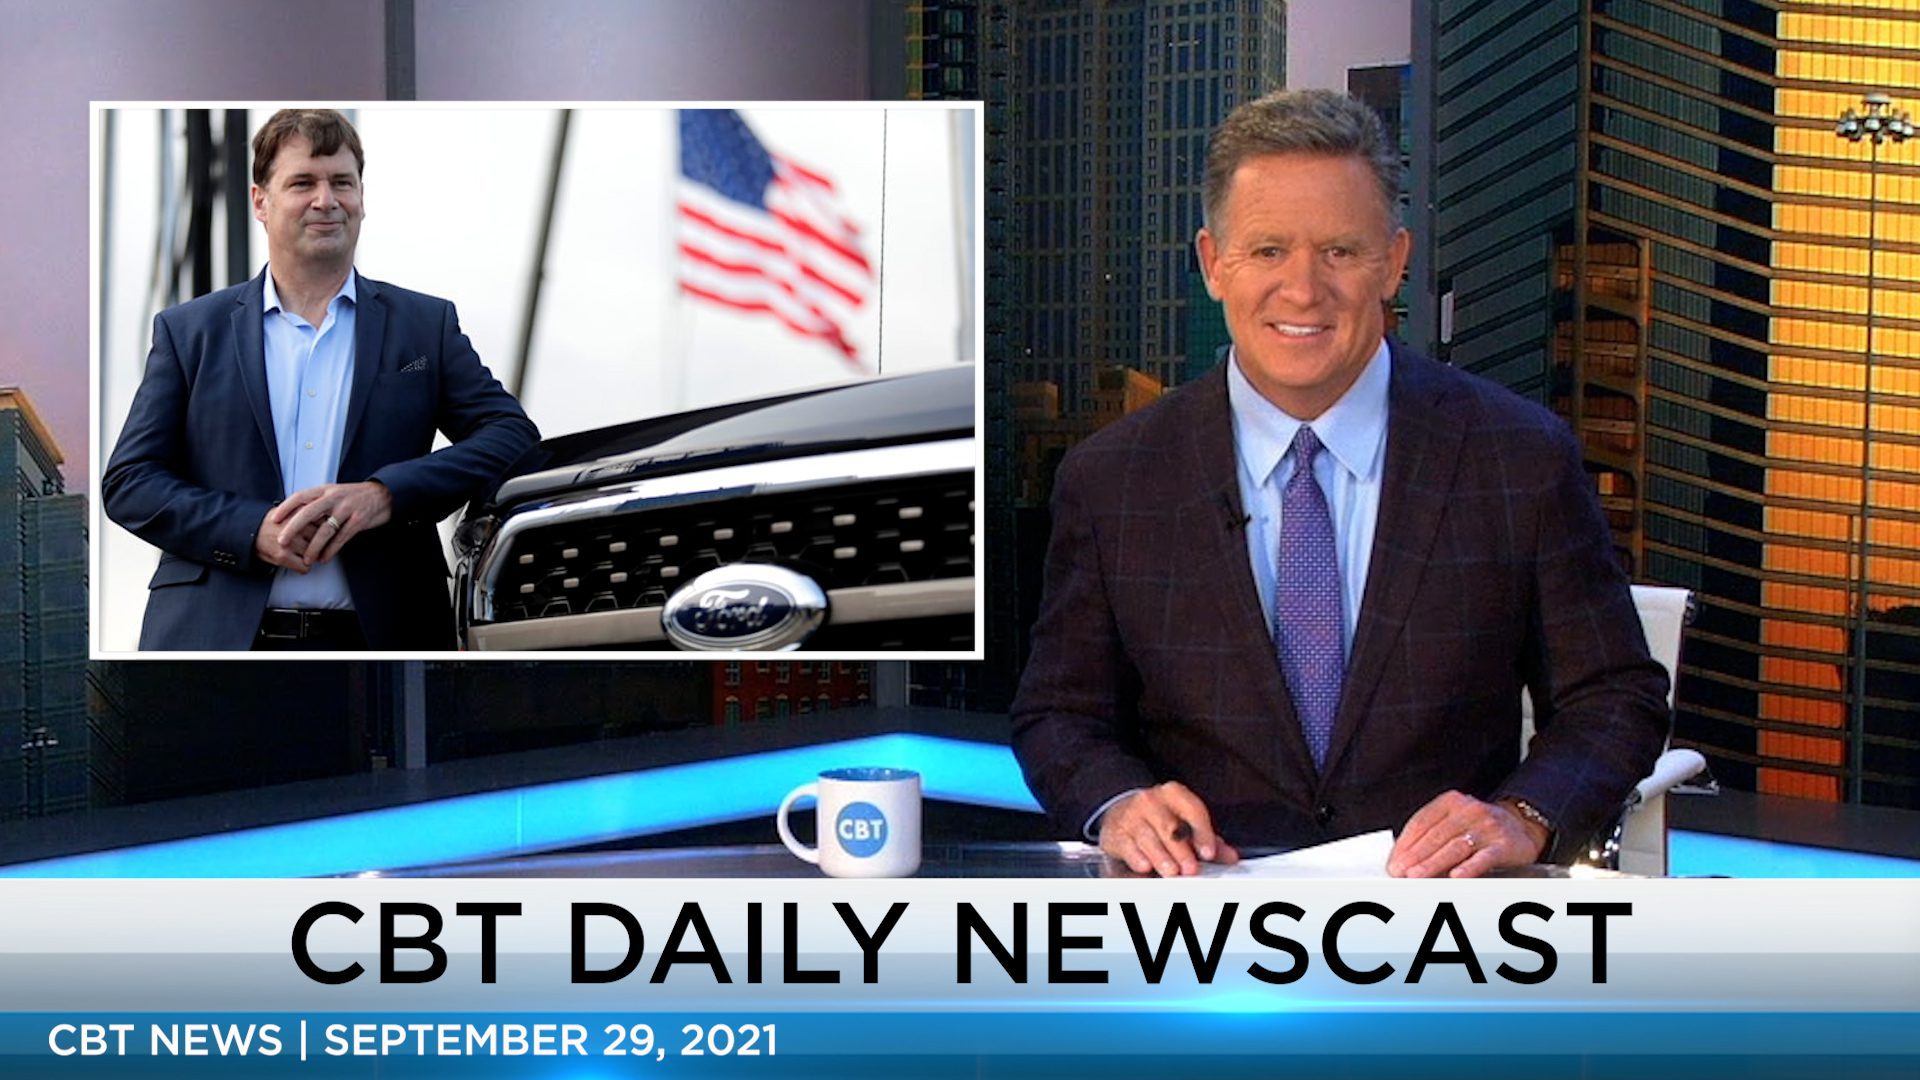 CBT automotive newscast: September 29, 2021